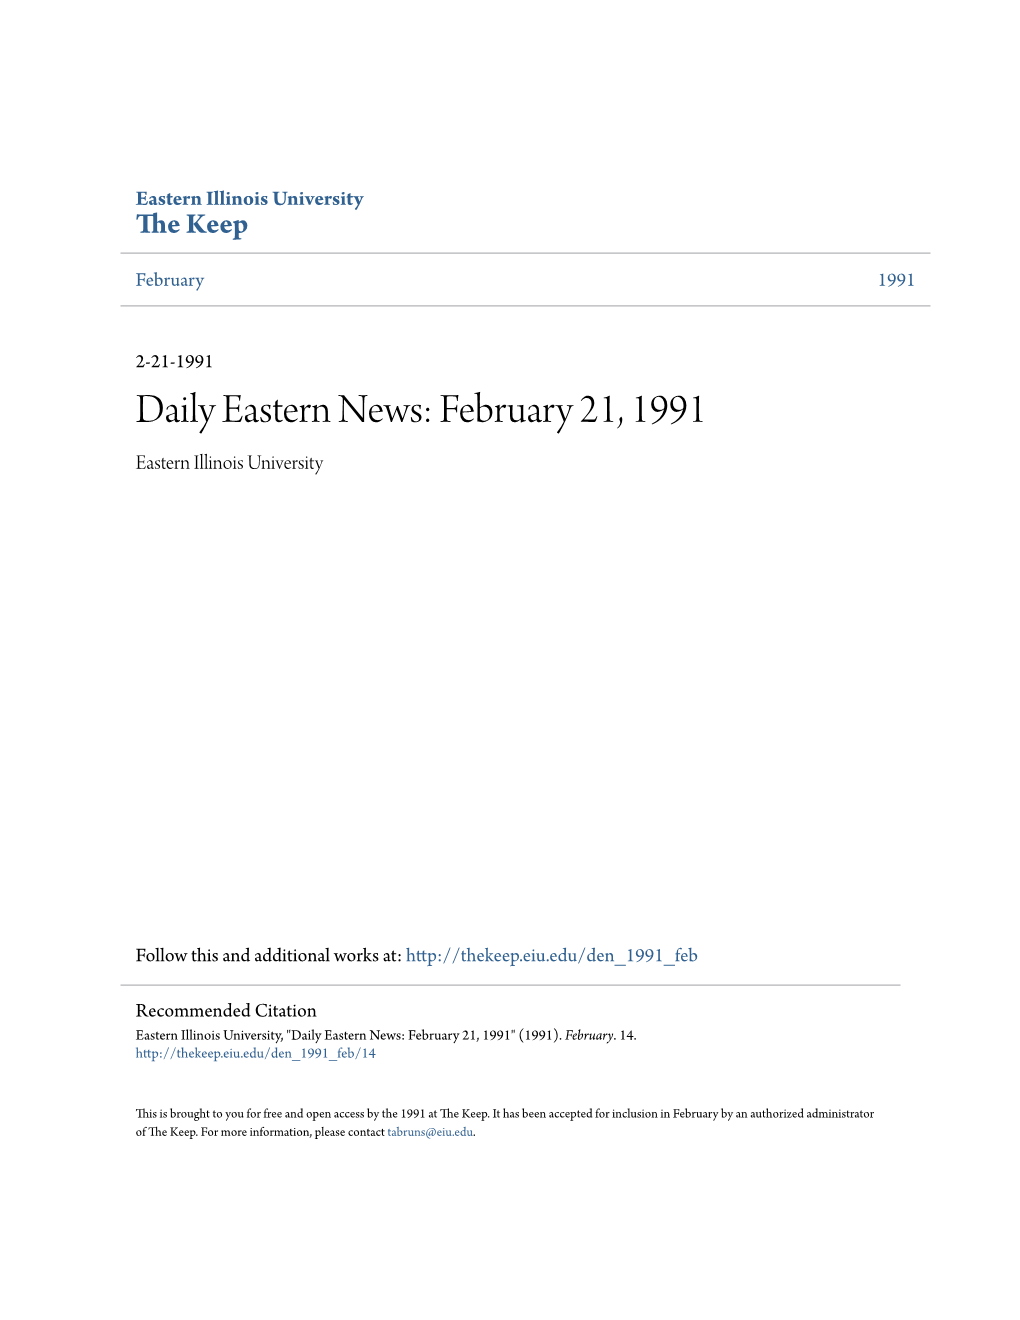 Daily Eastern News: February 21, 1991 Eastern Illinois University